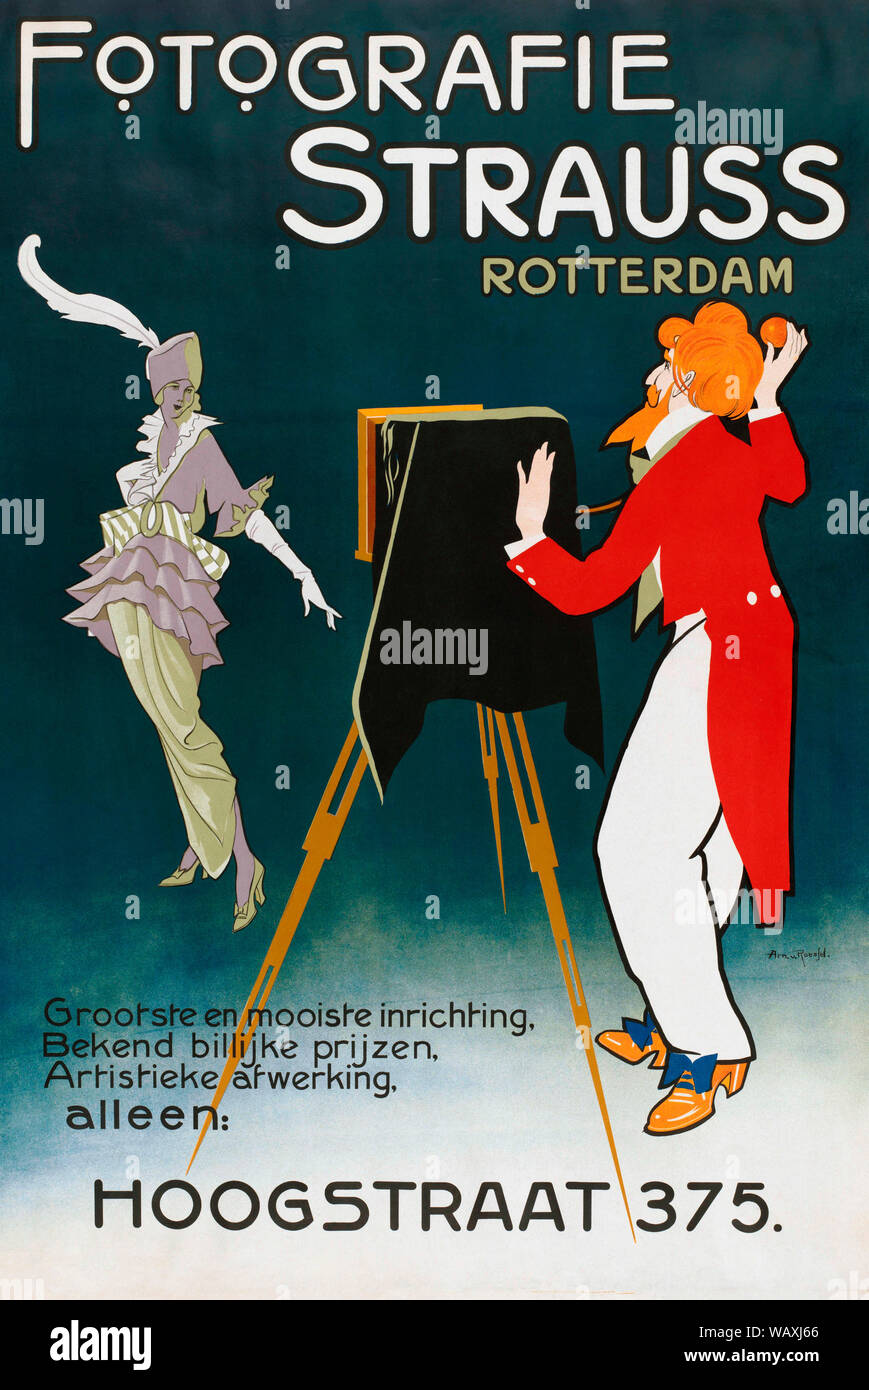 1914 poster advertising Fotografie Strauss in Rotterdam, Netherlands, by Dutch artist Arnold van Roessel, 1883-1947 Stock Photo